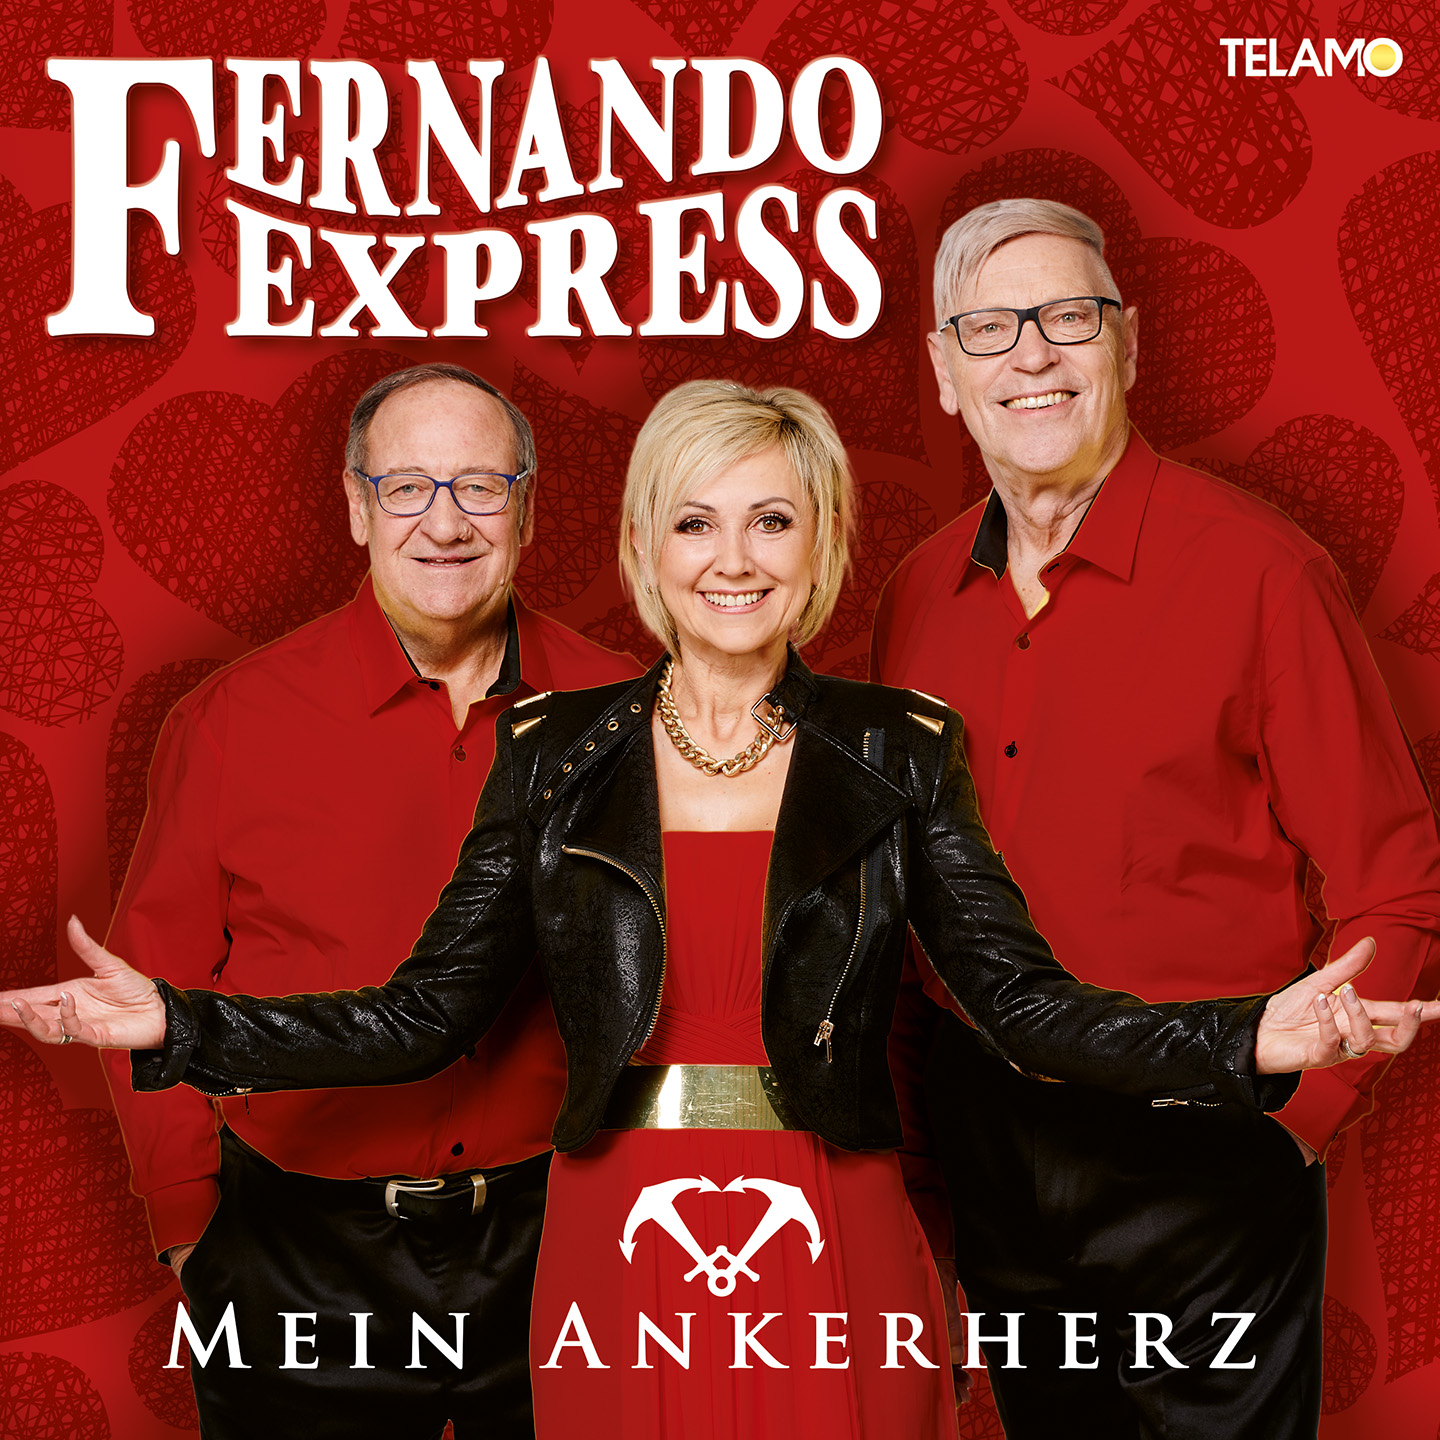 Fernando Express - Mein ankerherz (2020)